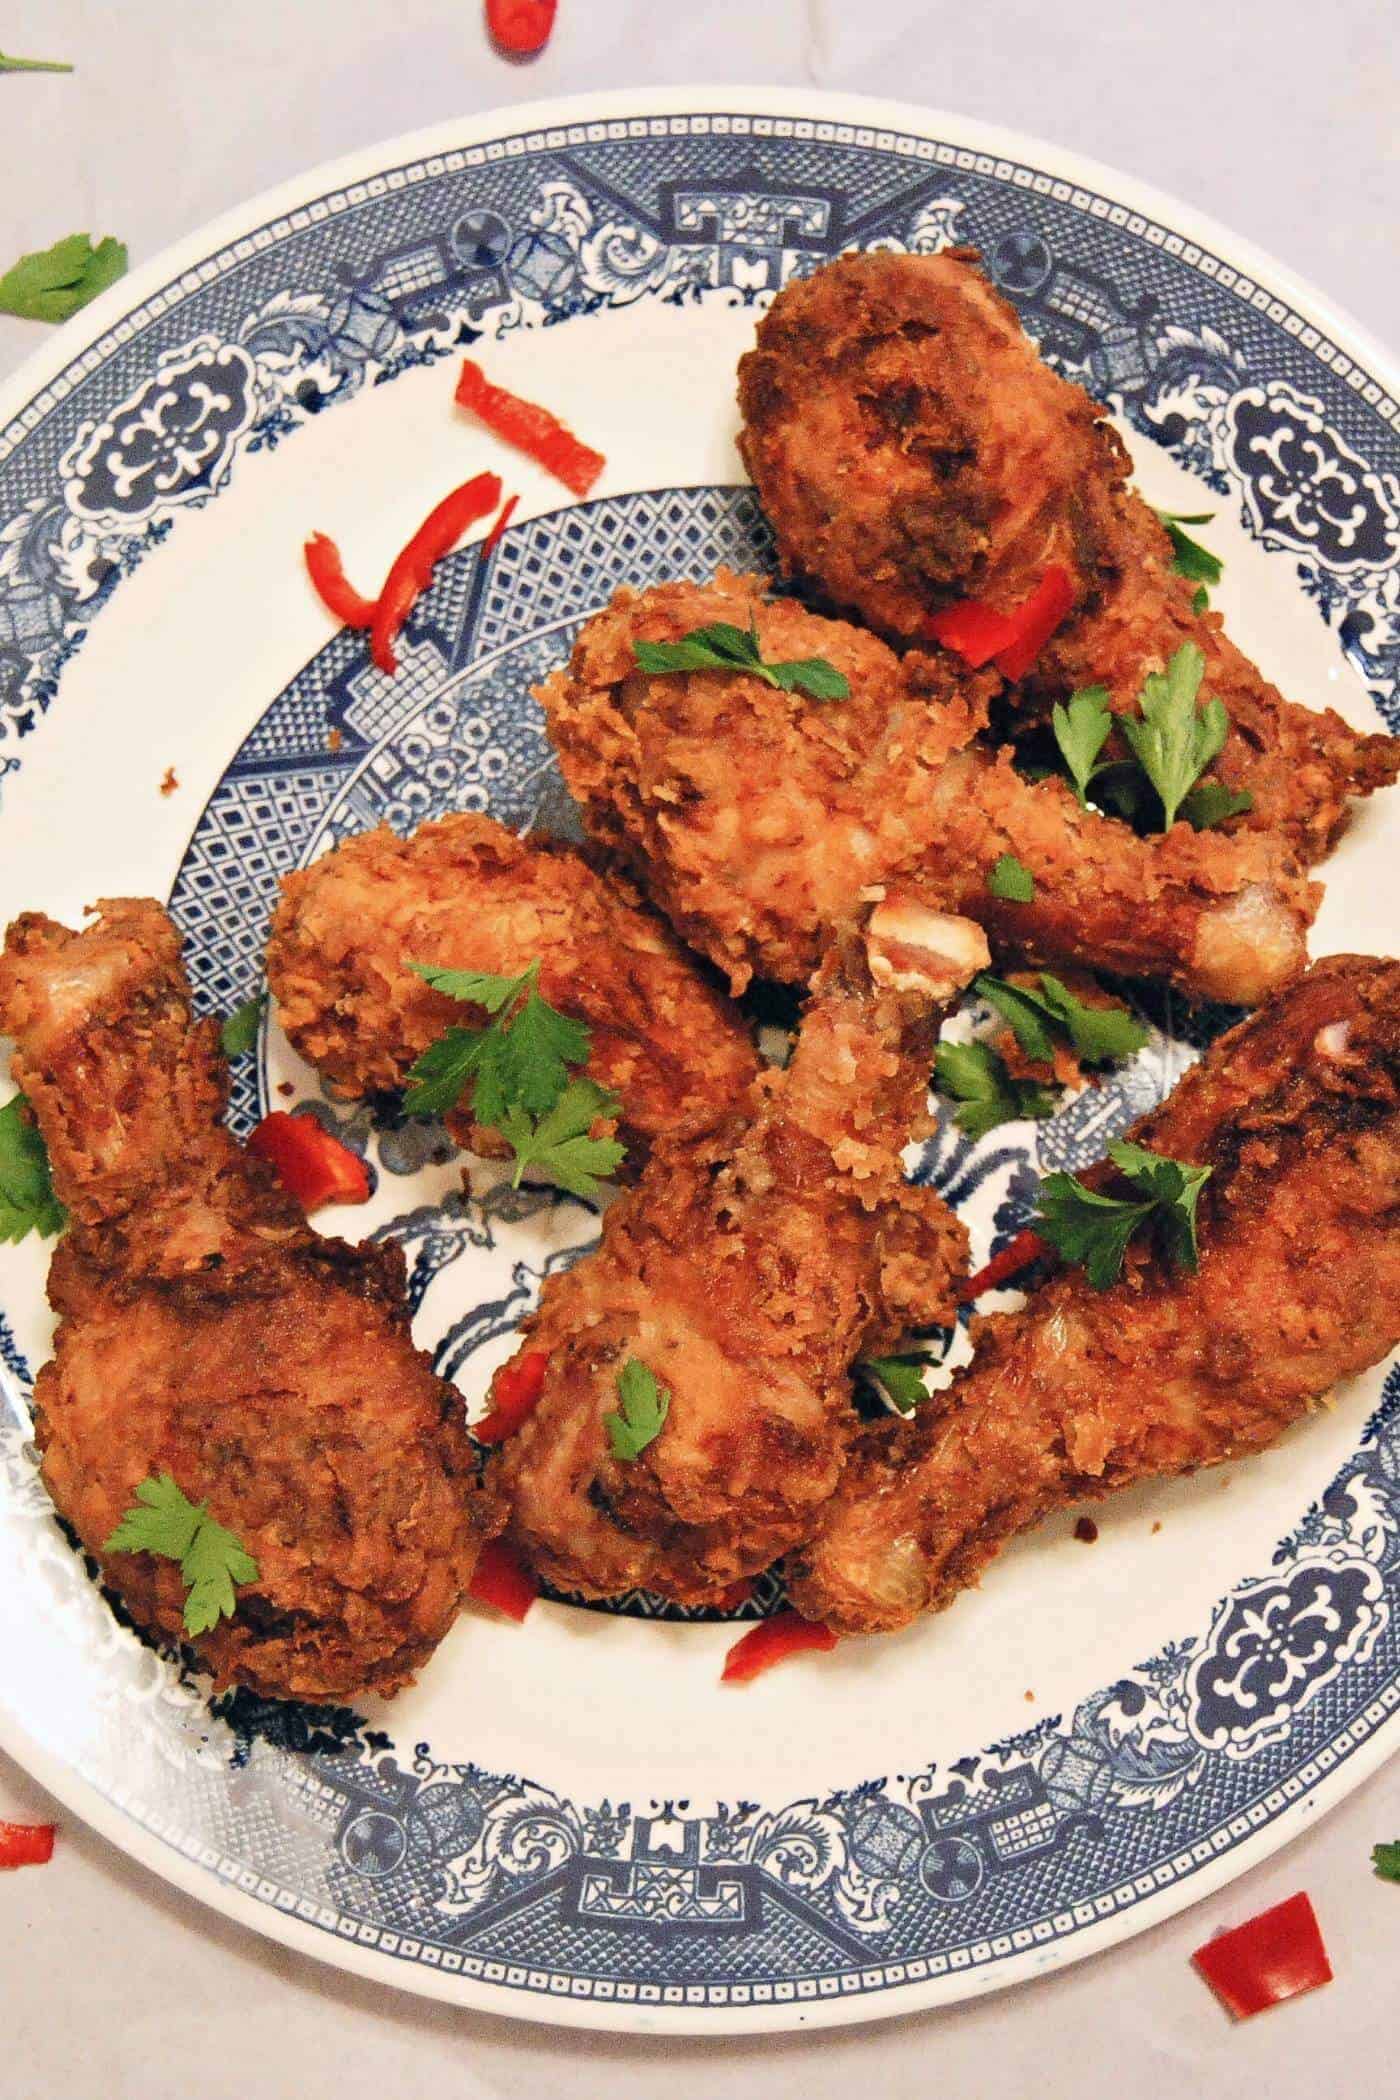 spicy fried chicken drumsticks on plate.